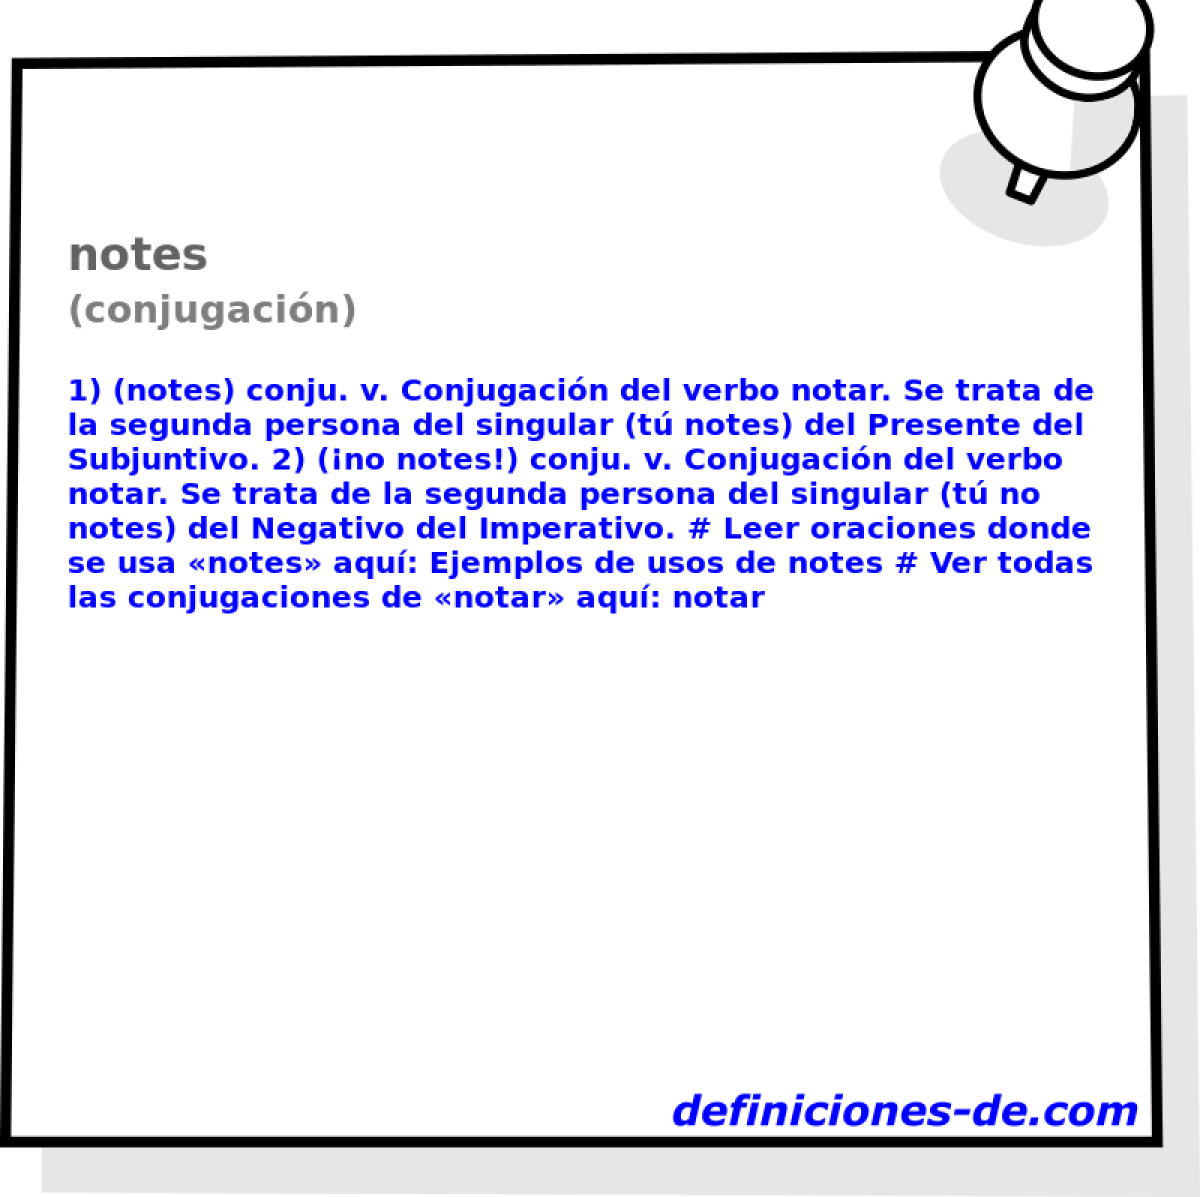 notes (conjugacin)